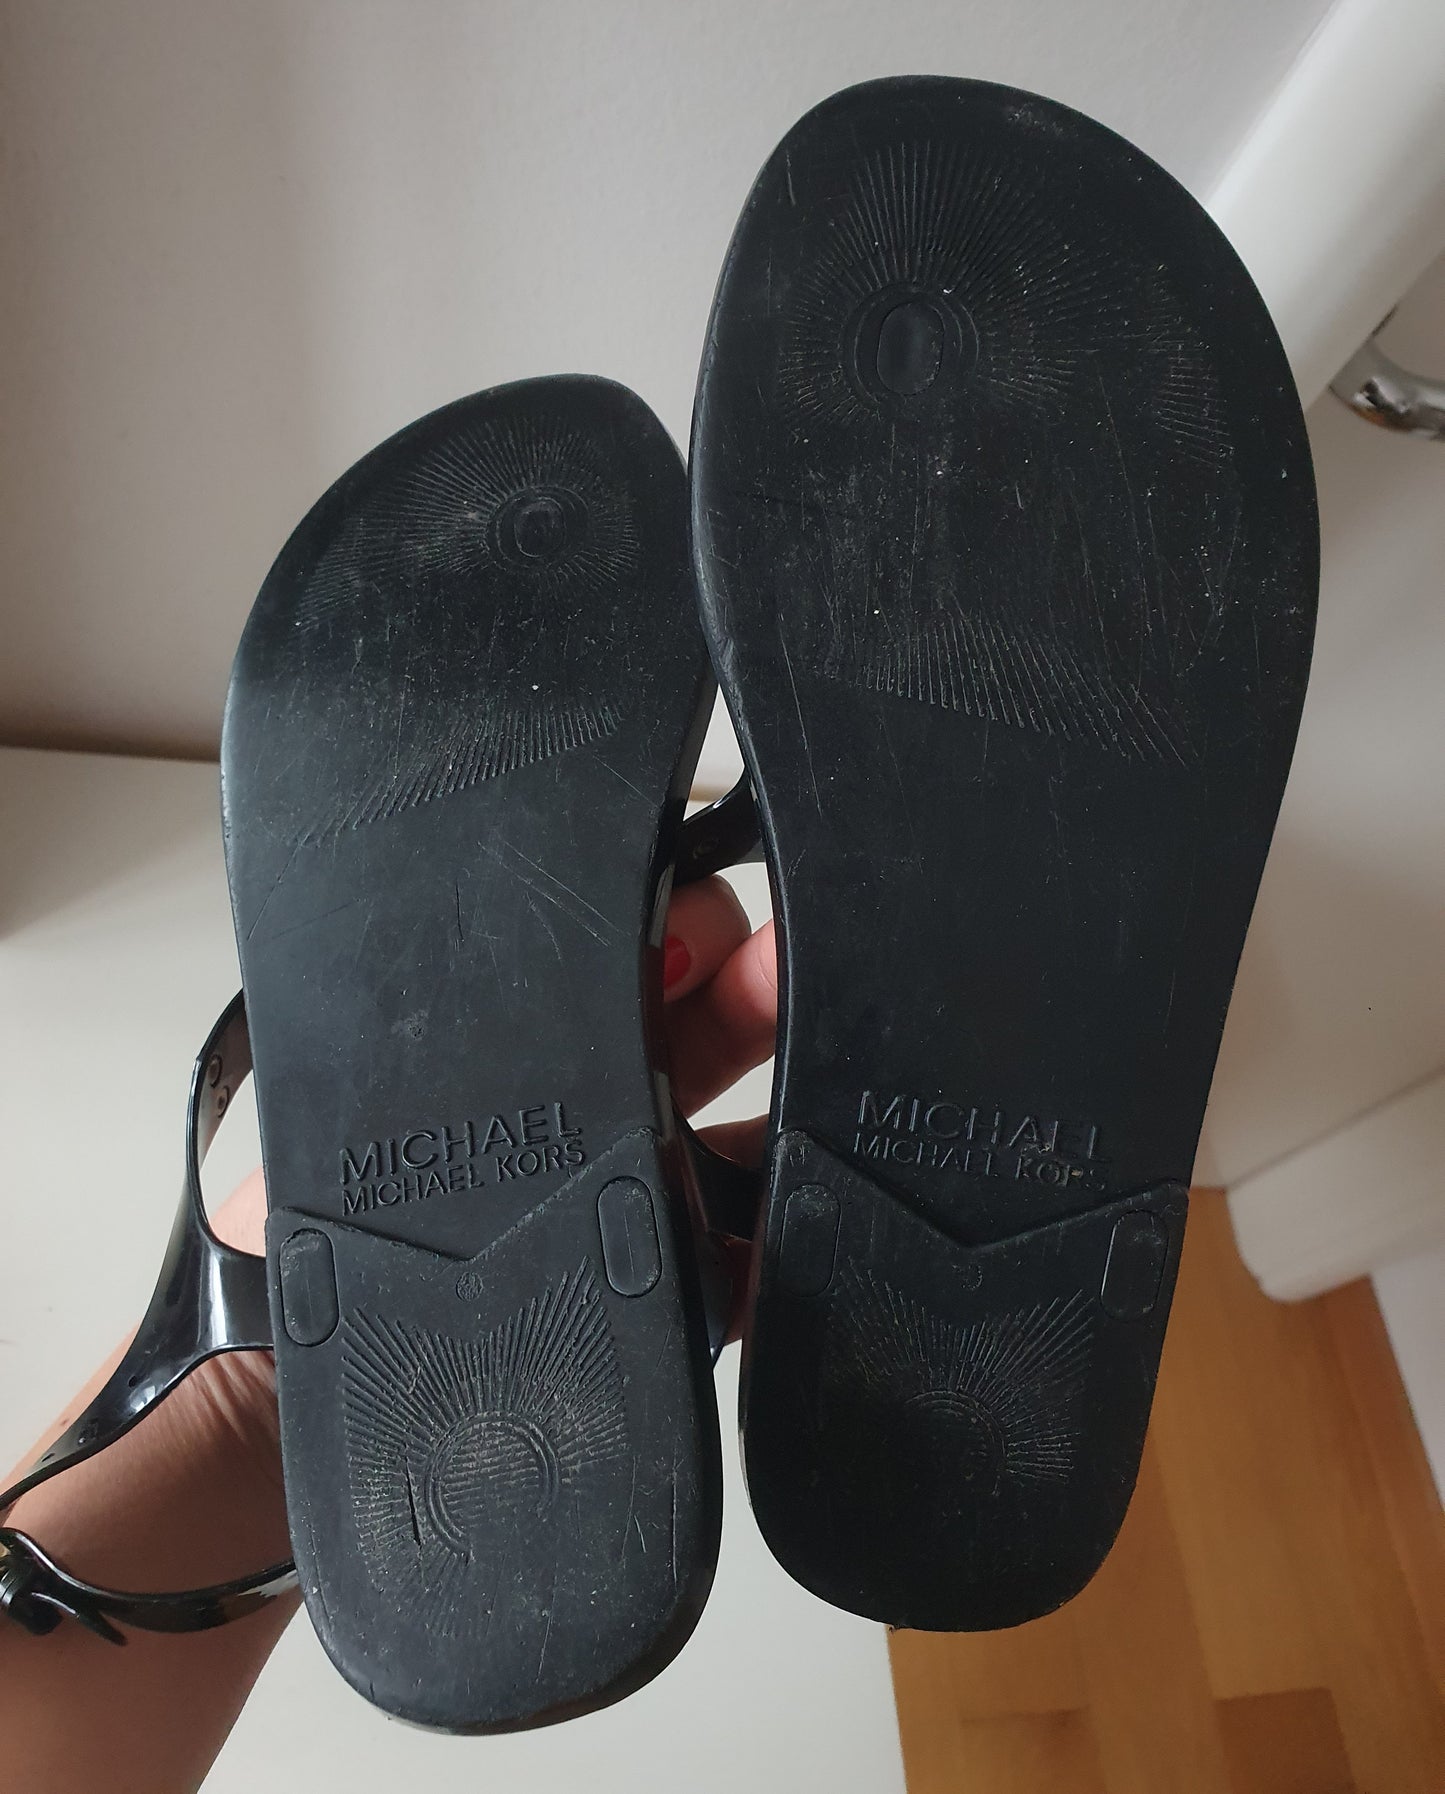 MICHAEL KORS gumene sandale, gazište oko 24 cm.